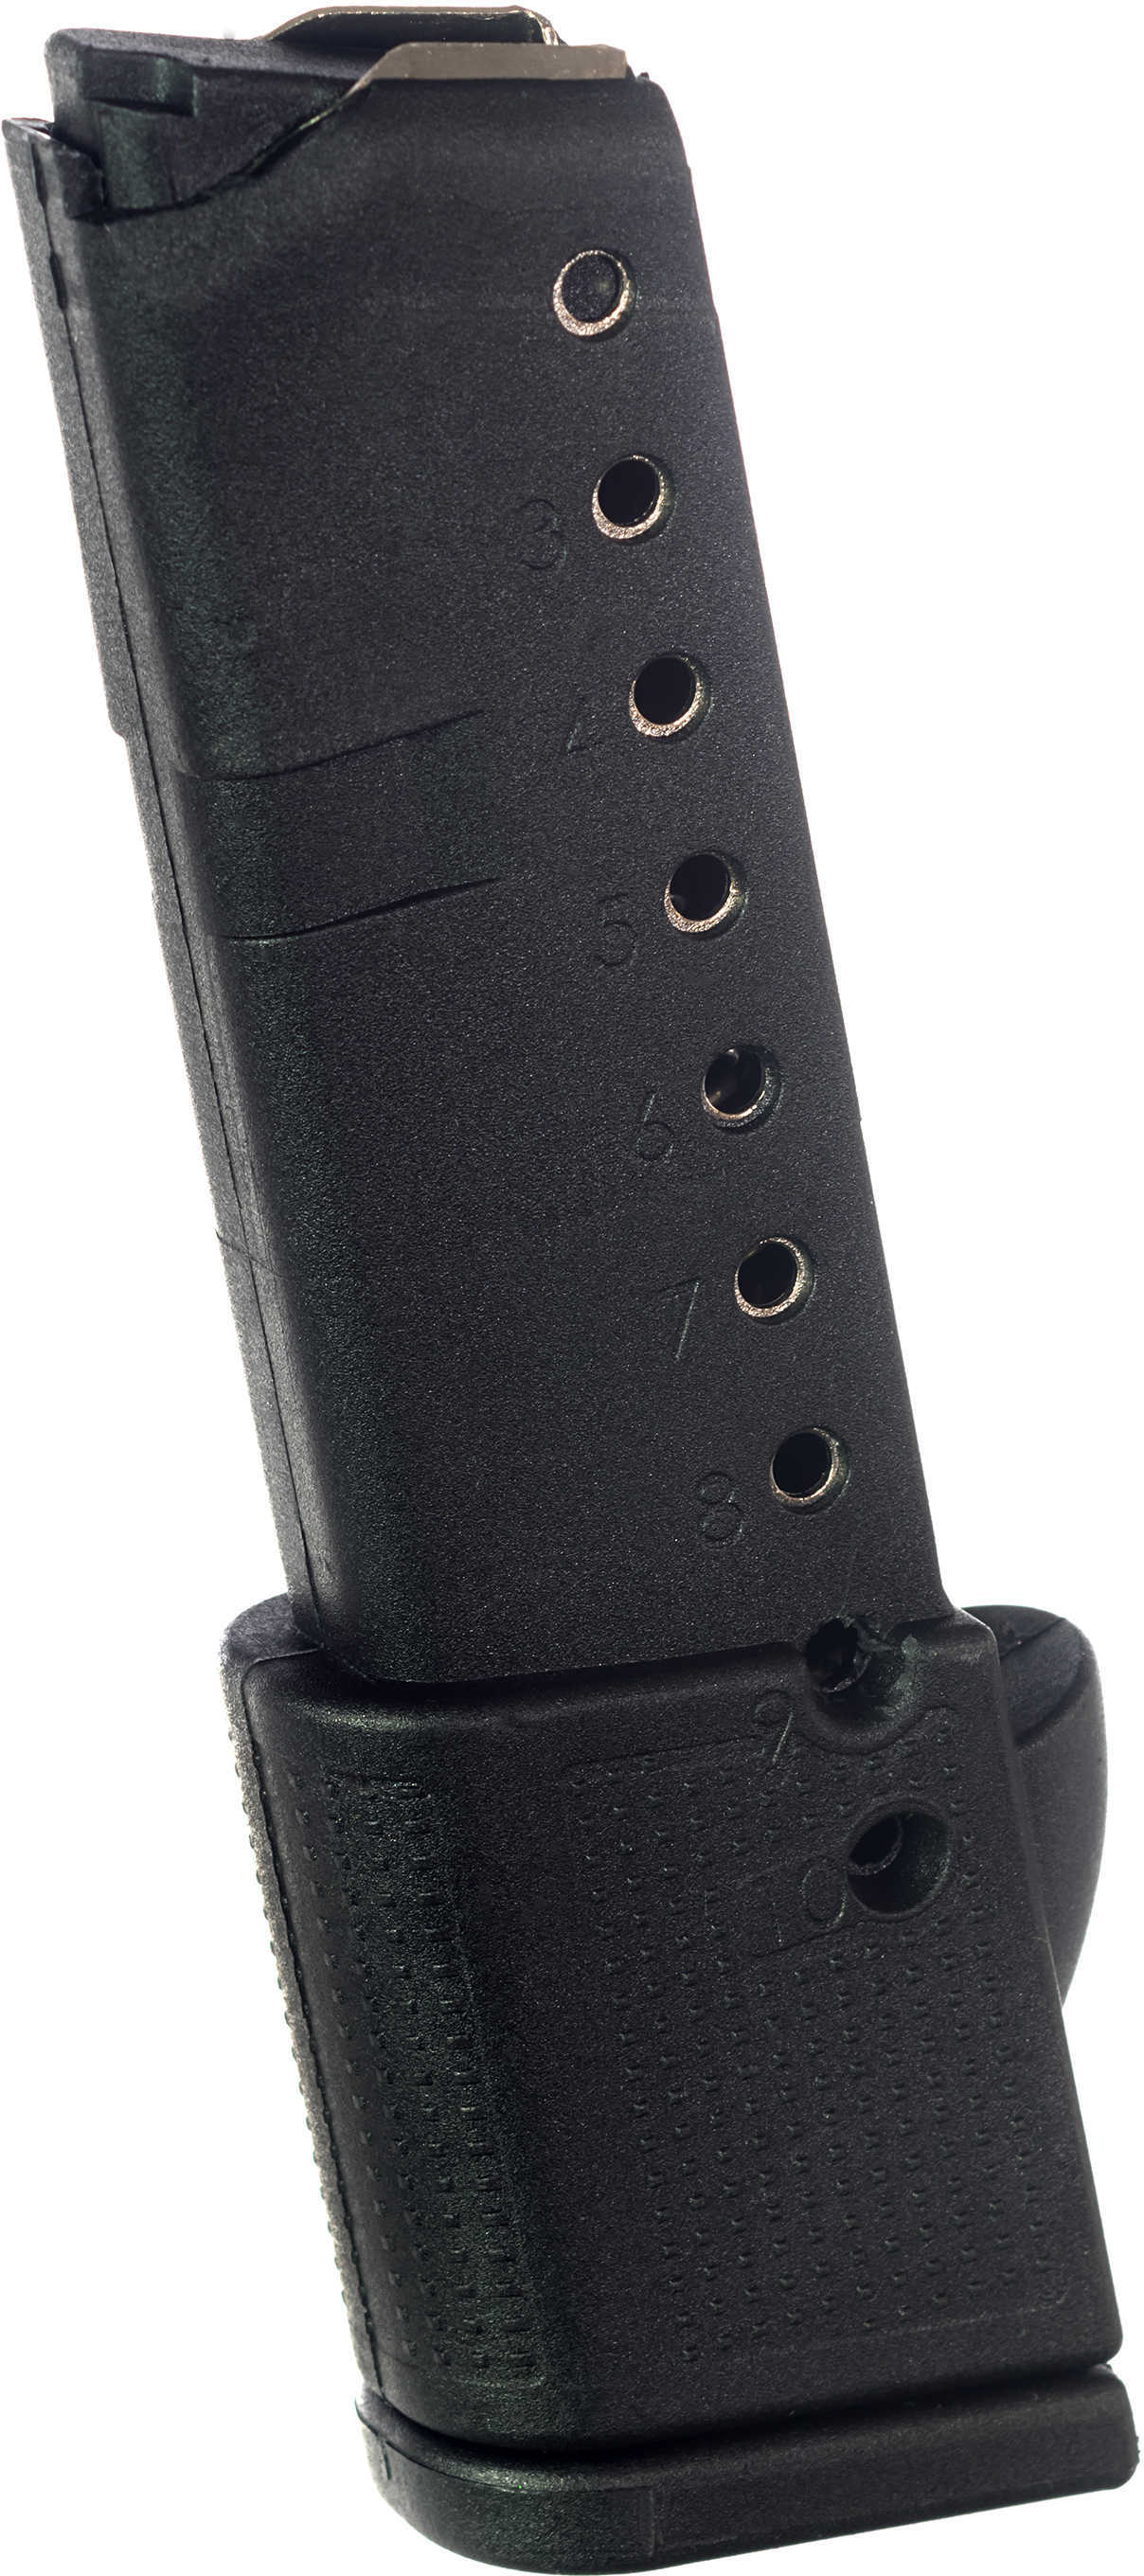 ProMag GLK11 Replacement Magazine Fits Glock G42 380 Automatic Colt Pistol (ACP) 10 Round Polymer Black Finish